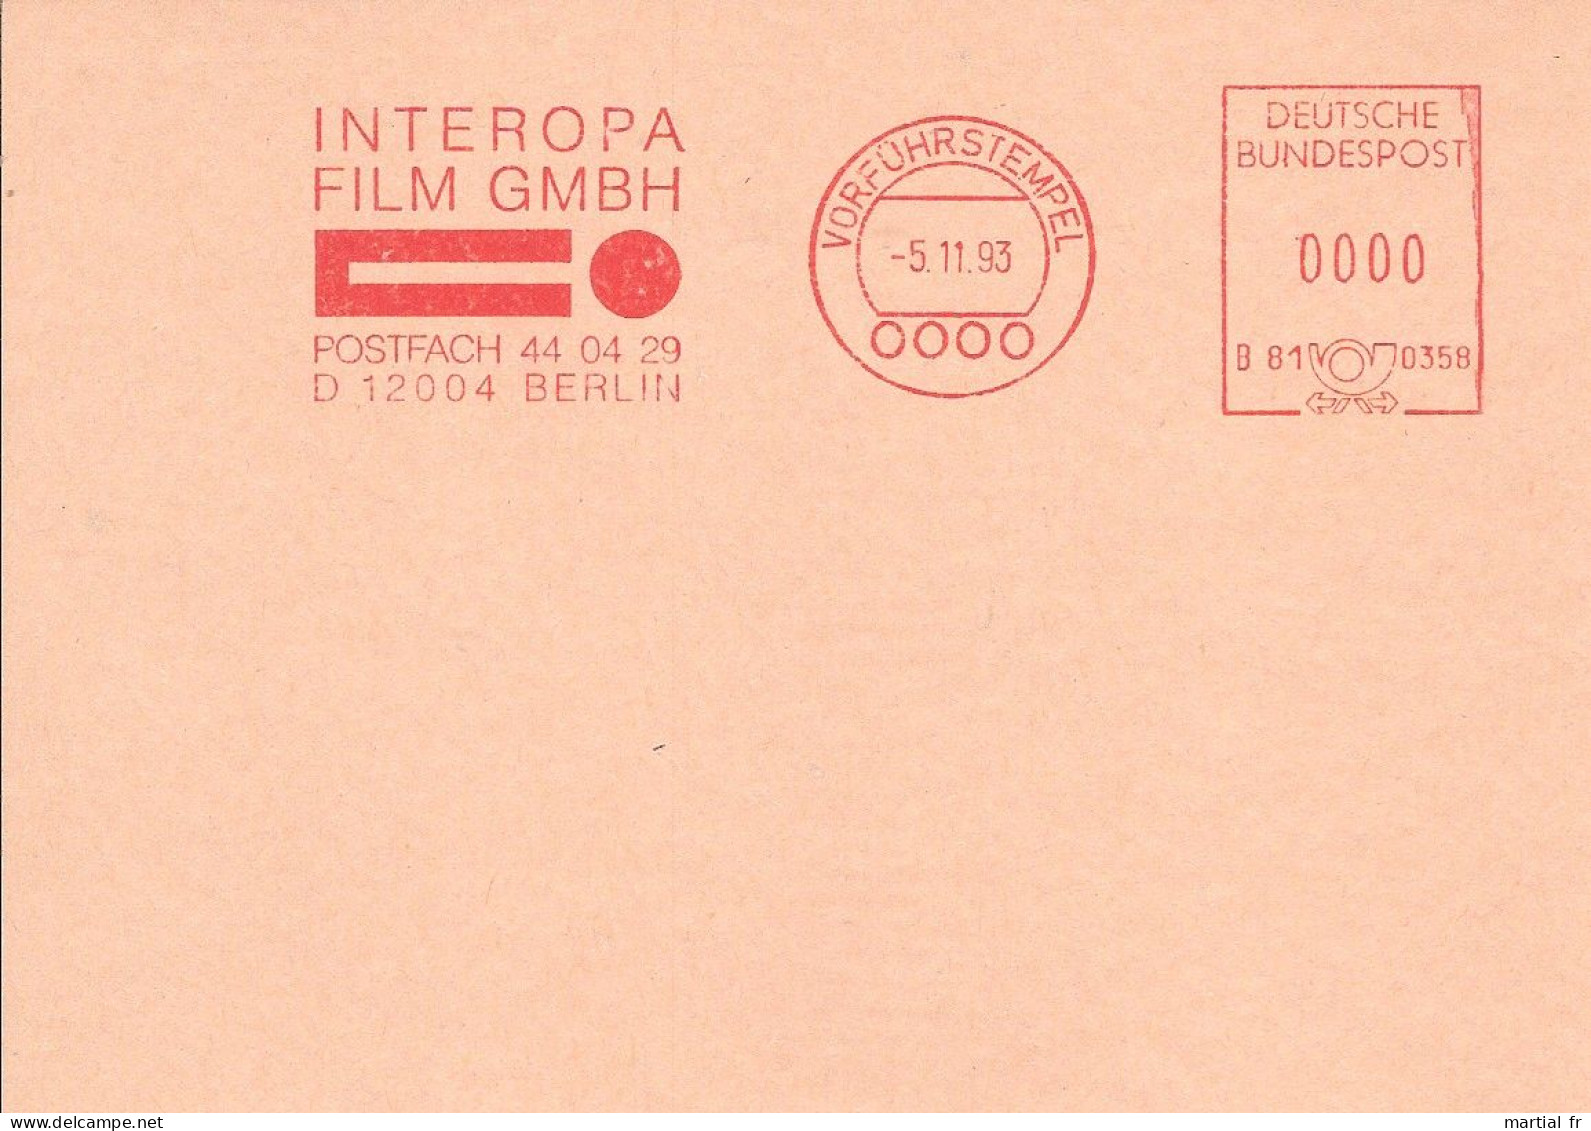 EMA ALLEMAGNE SPECIMEN GERMANY PHOTOGRAPHIE PHOTO FOTO FOTOGRAFIE FILM CINEMA KINO INTEROPA BERLIN - Film